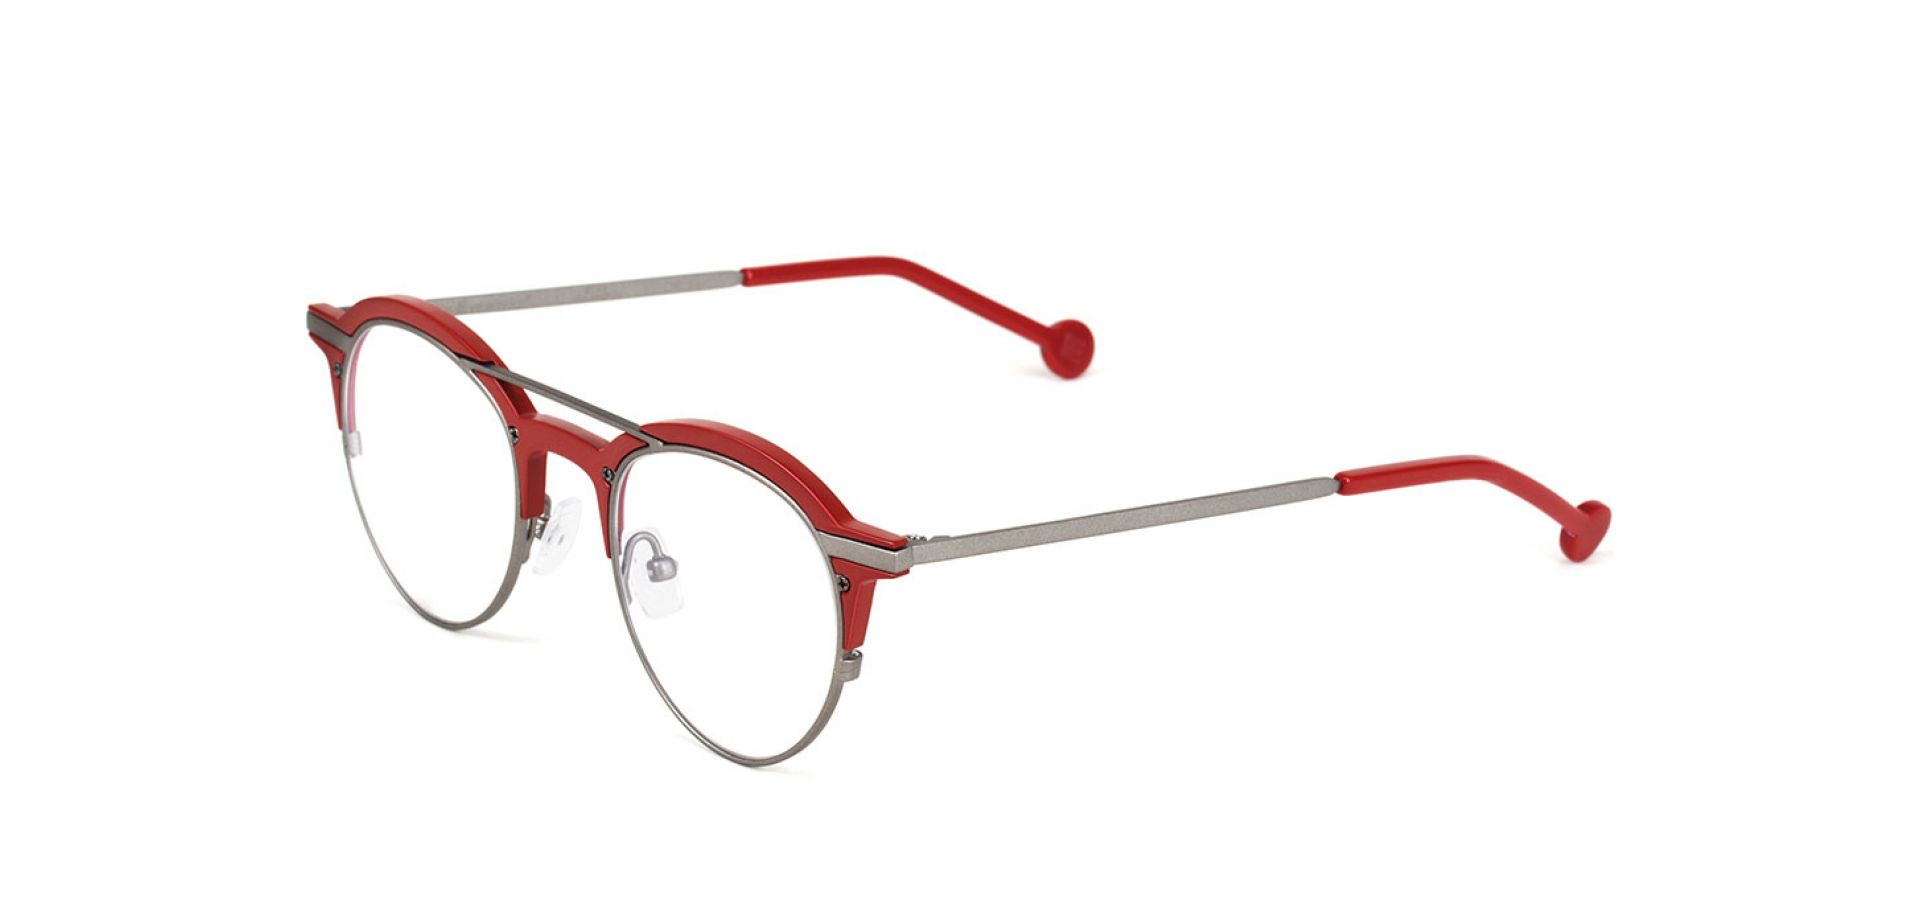 Korekcijska očala l. a. Eyeworks TA529510DF TOPANGA BRICK RED: Velikost: 46/22/142, Spol: unisex, Material: titan